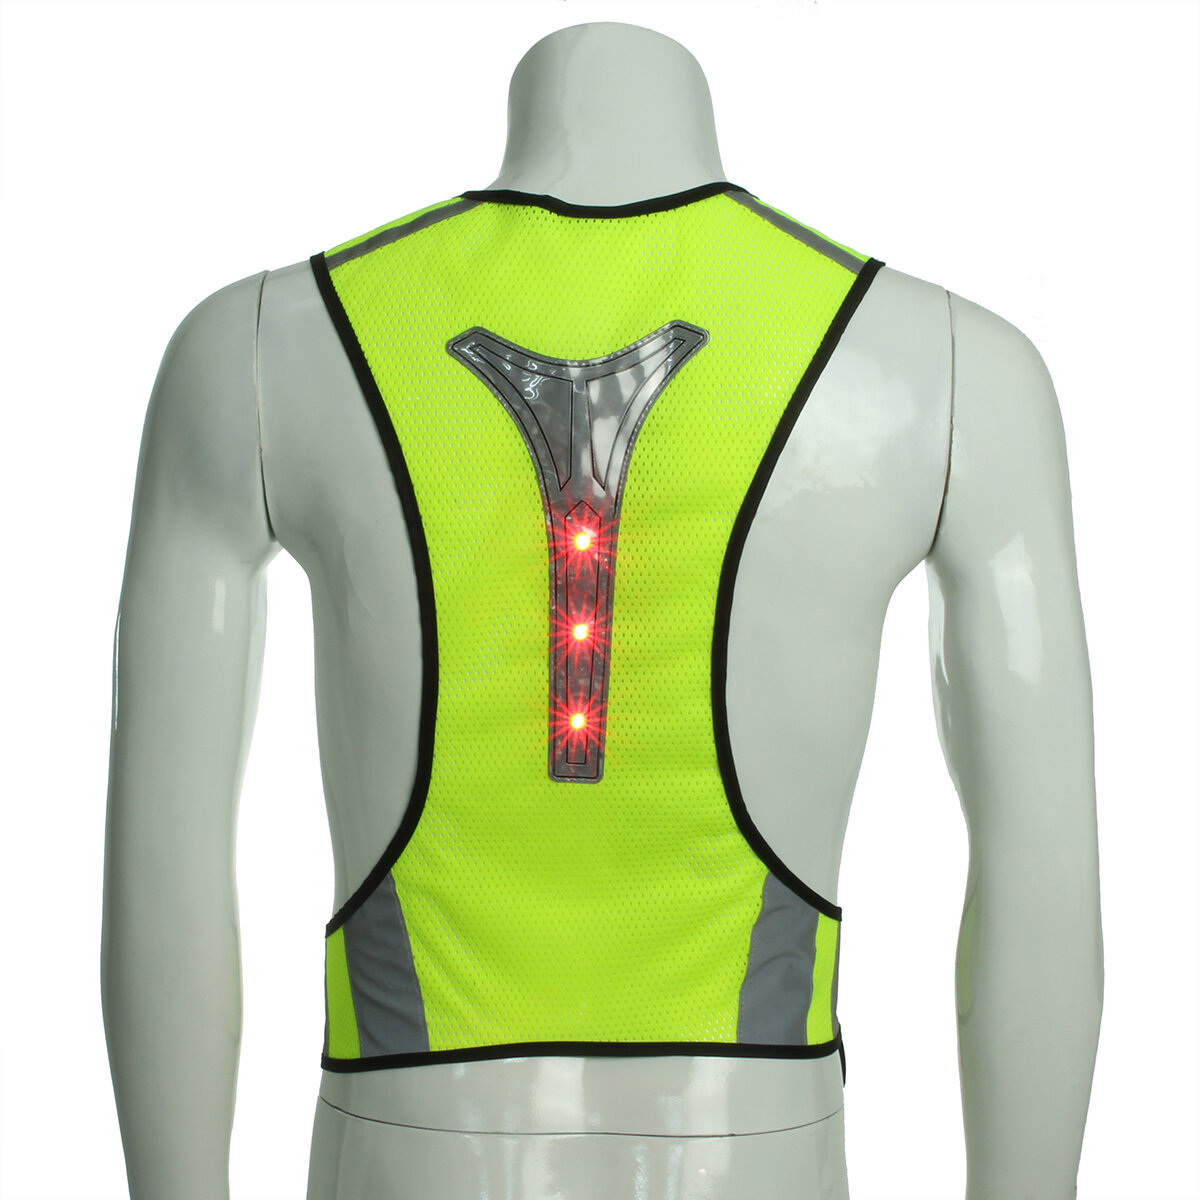 BIKIGHT Elastic LED Cycling Vest Adjustable Visibility Reflective Vest Night Sports Reflective Belt For Safety Riding Ad